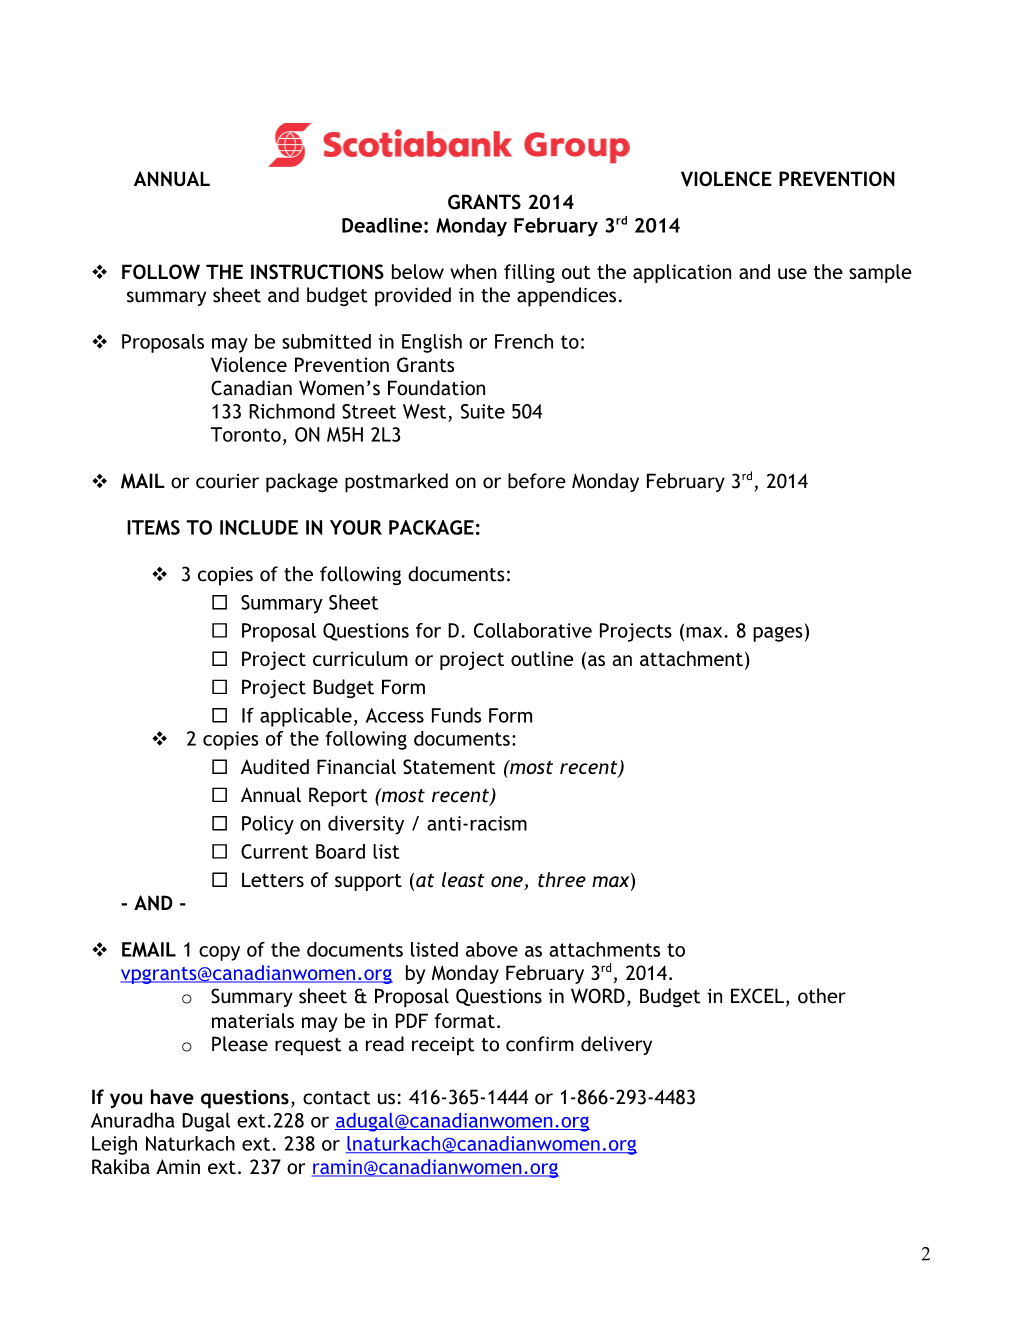 Annual Violence Prevention Grants 2014